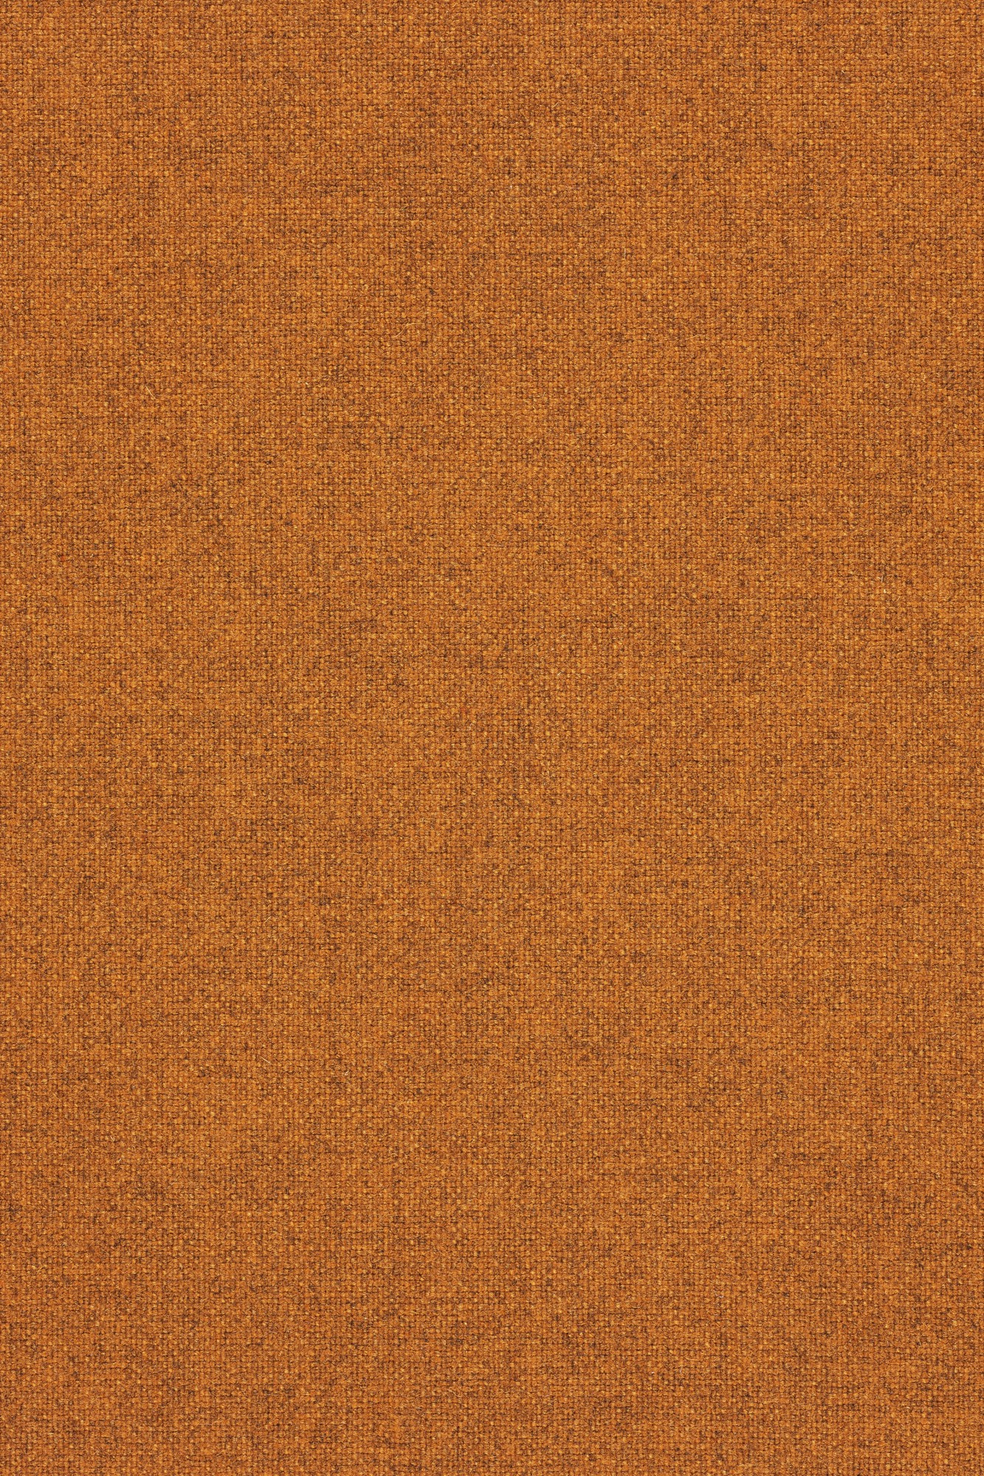 Fabric sample Tonica 2 511 orange